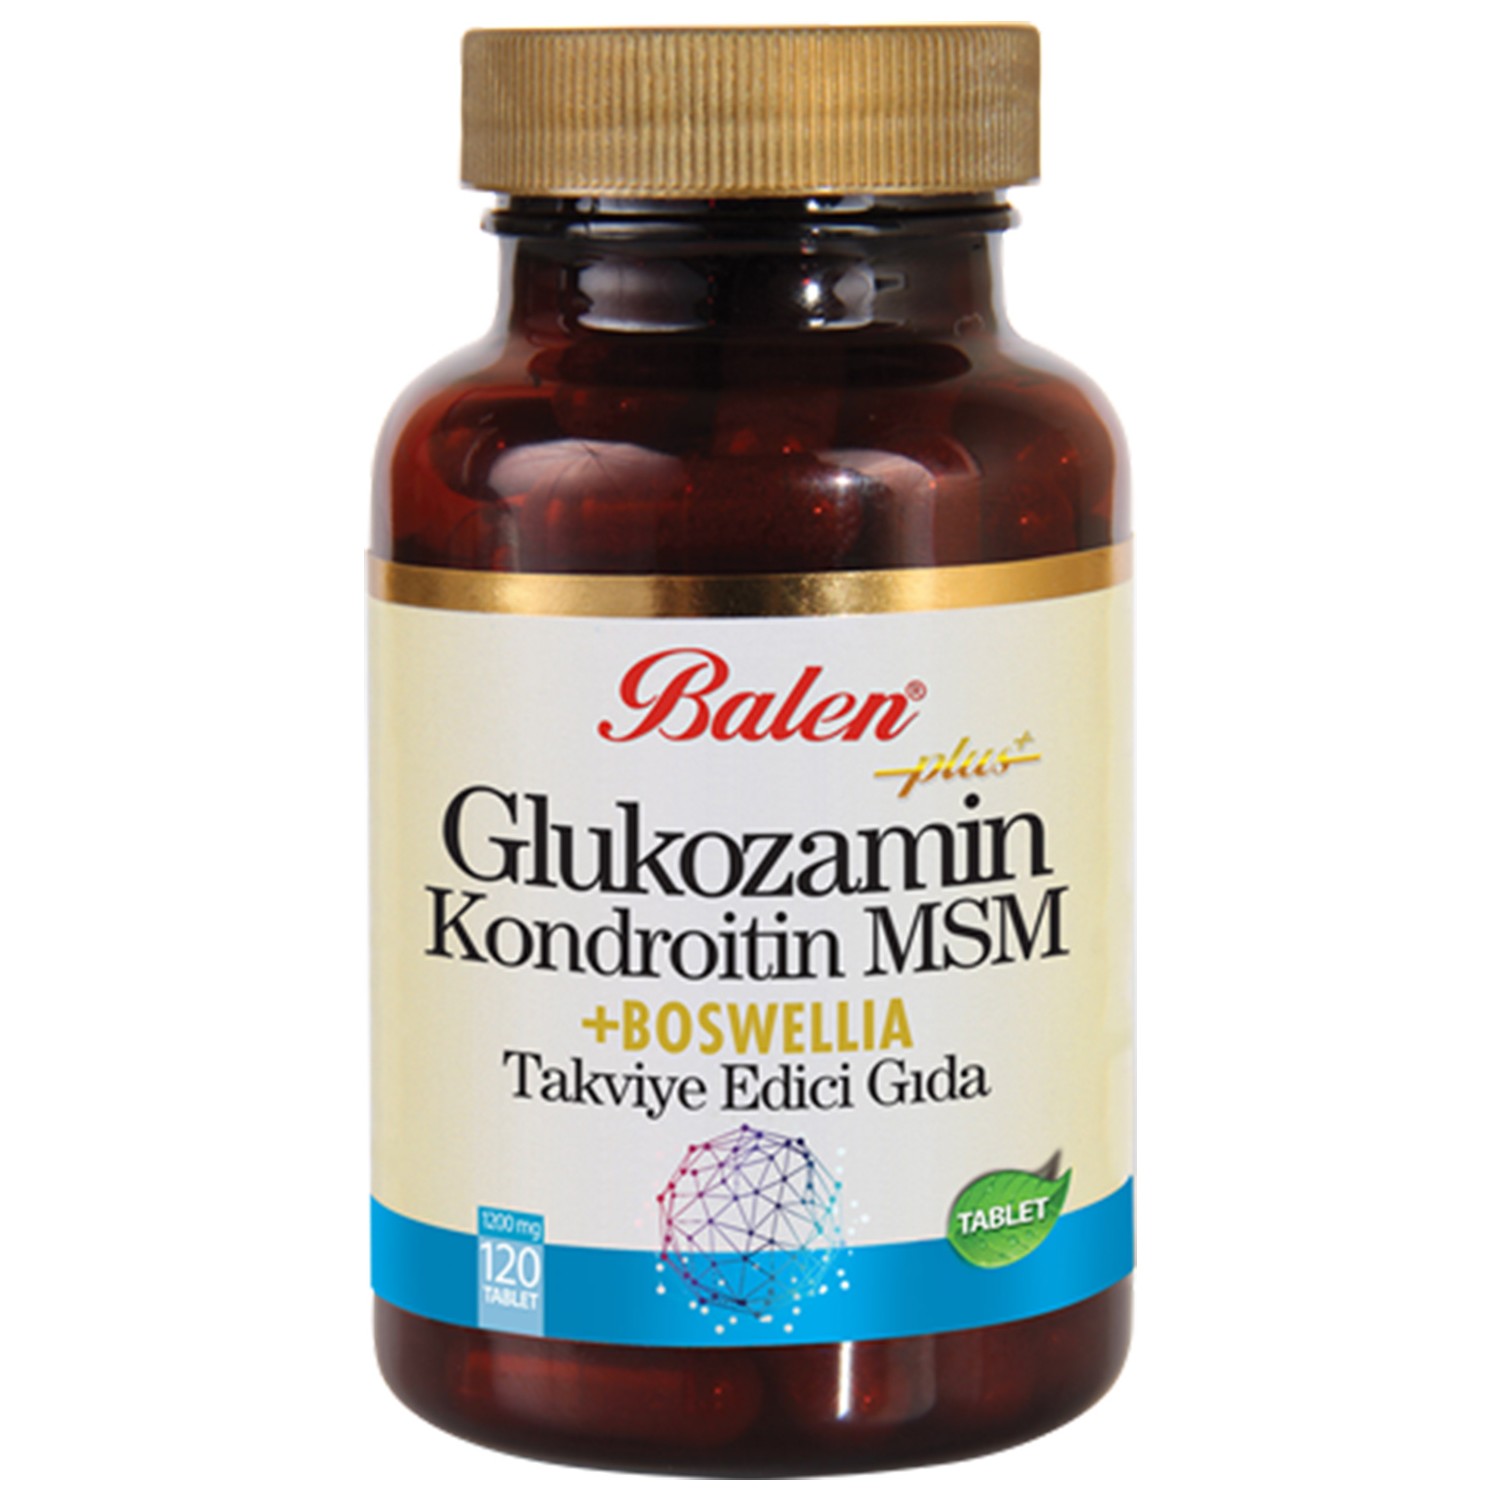 Активная добавка глюкозамин Balen Chondroitin Msm и Boswellia, 120 капсул, 1200 мг активная добавка глюкозамин balen chondroitin msm 120 капсул 970 мг